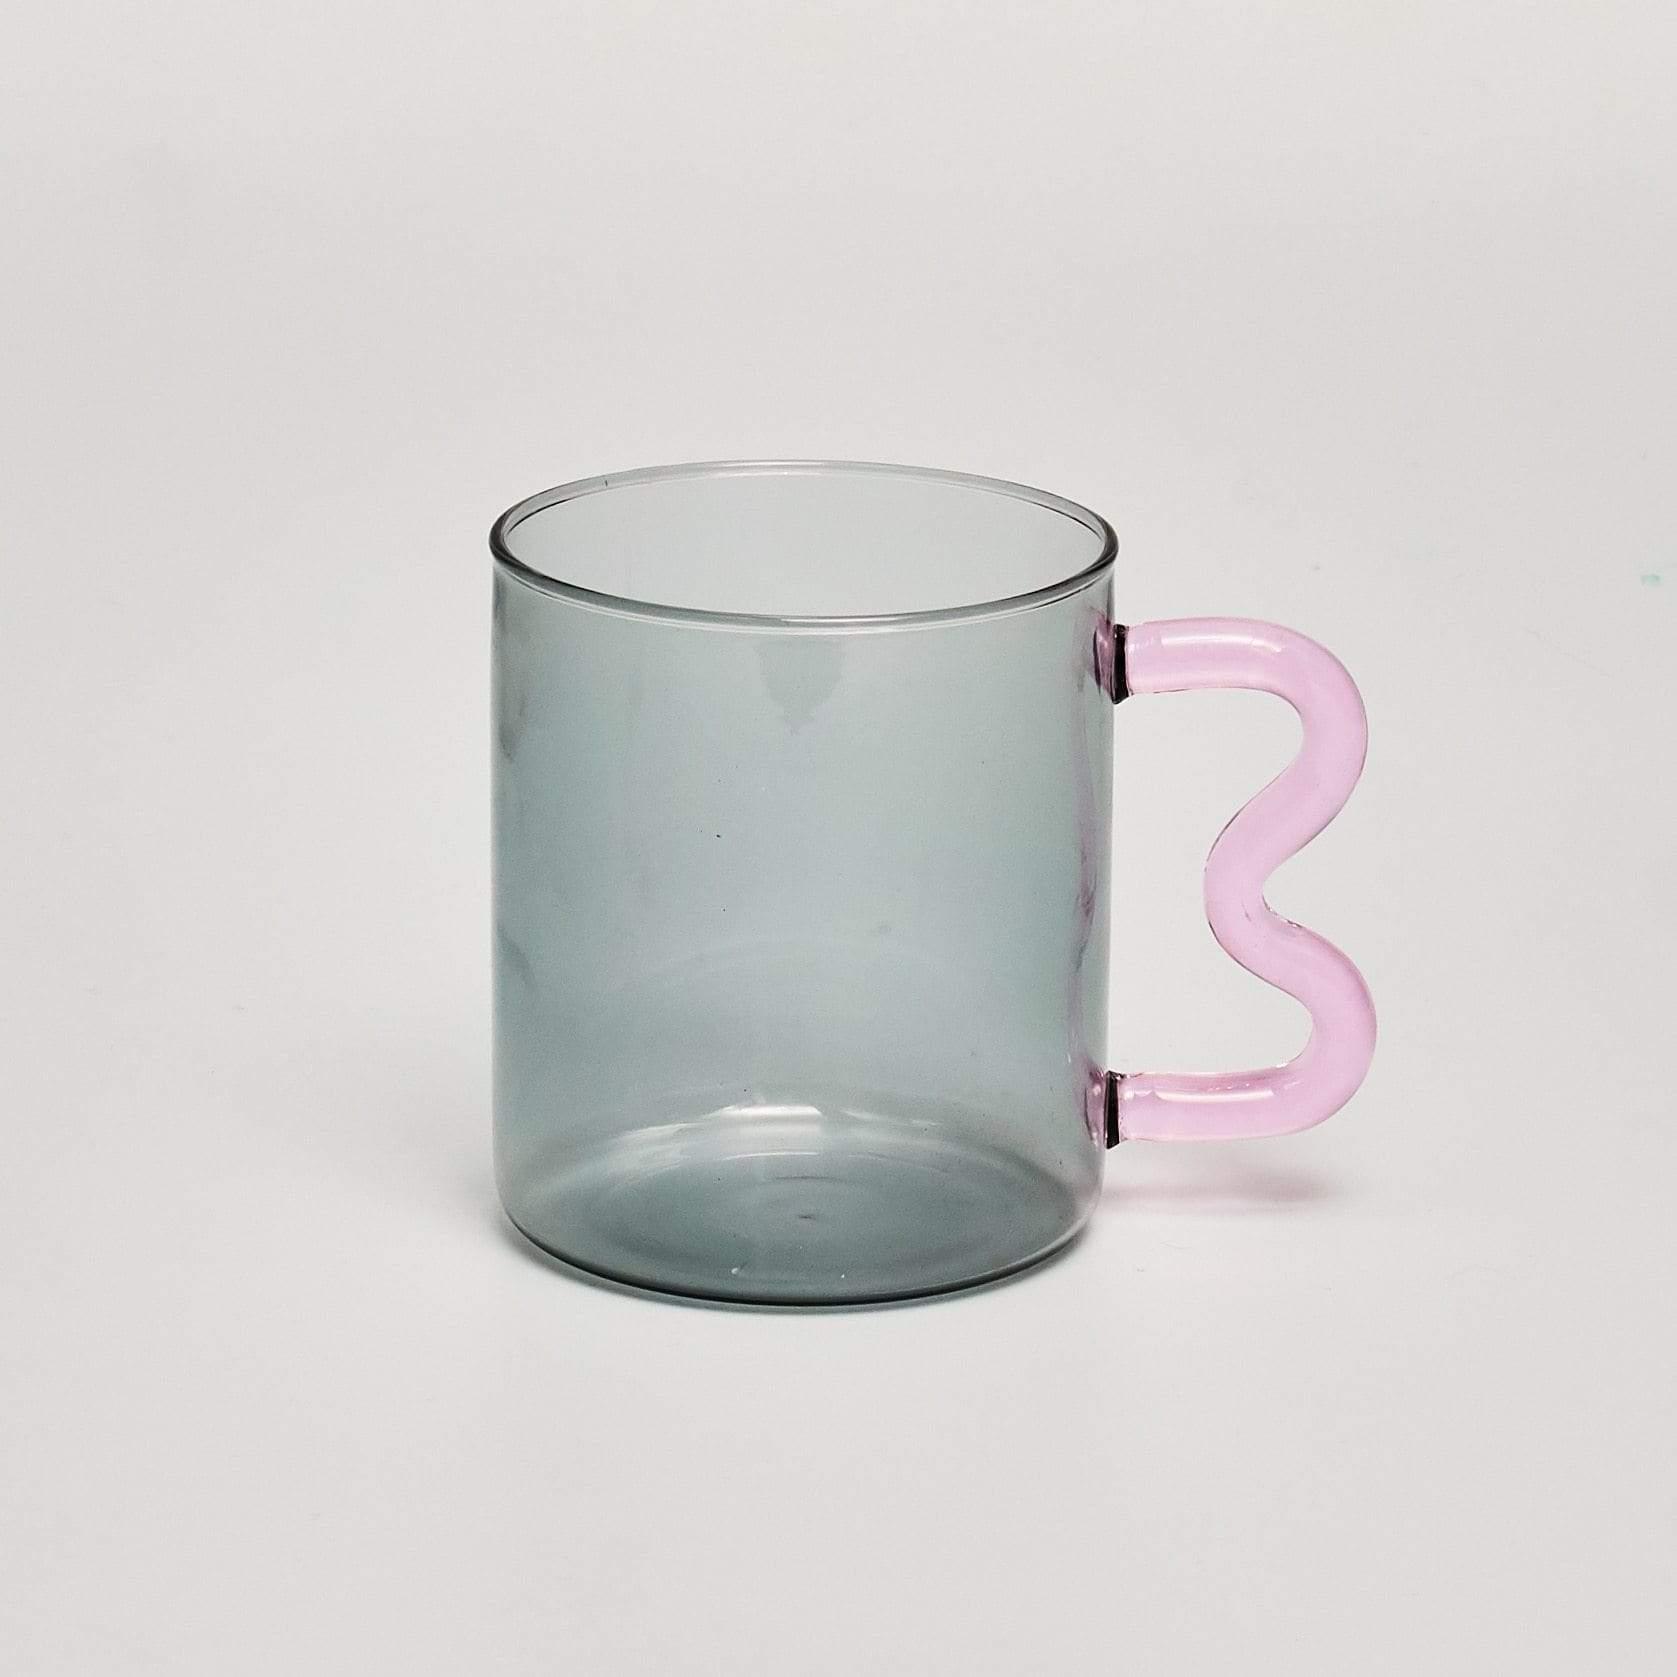 Shop 0 Grey 01 / 301-400ml Design Colorful Ear Glass Mug Handmade Simple Wave Coffee Cup for Hot Water Tumbler Gift Drinkware 300ml Mademoiselle Home Decor